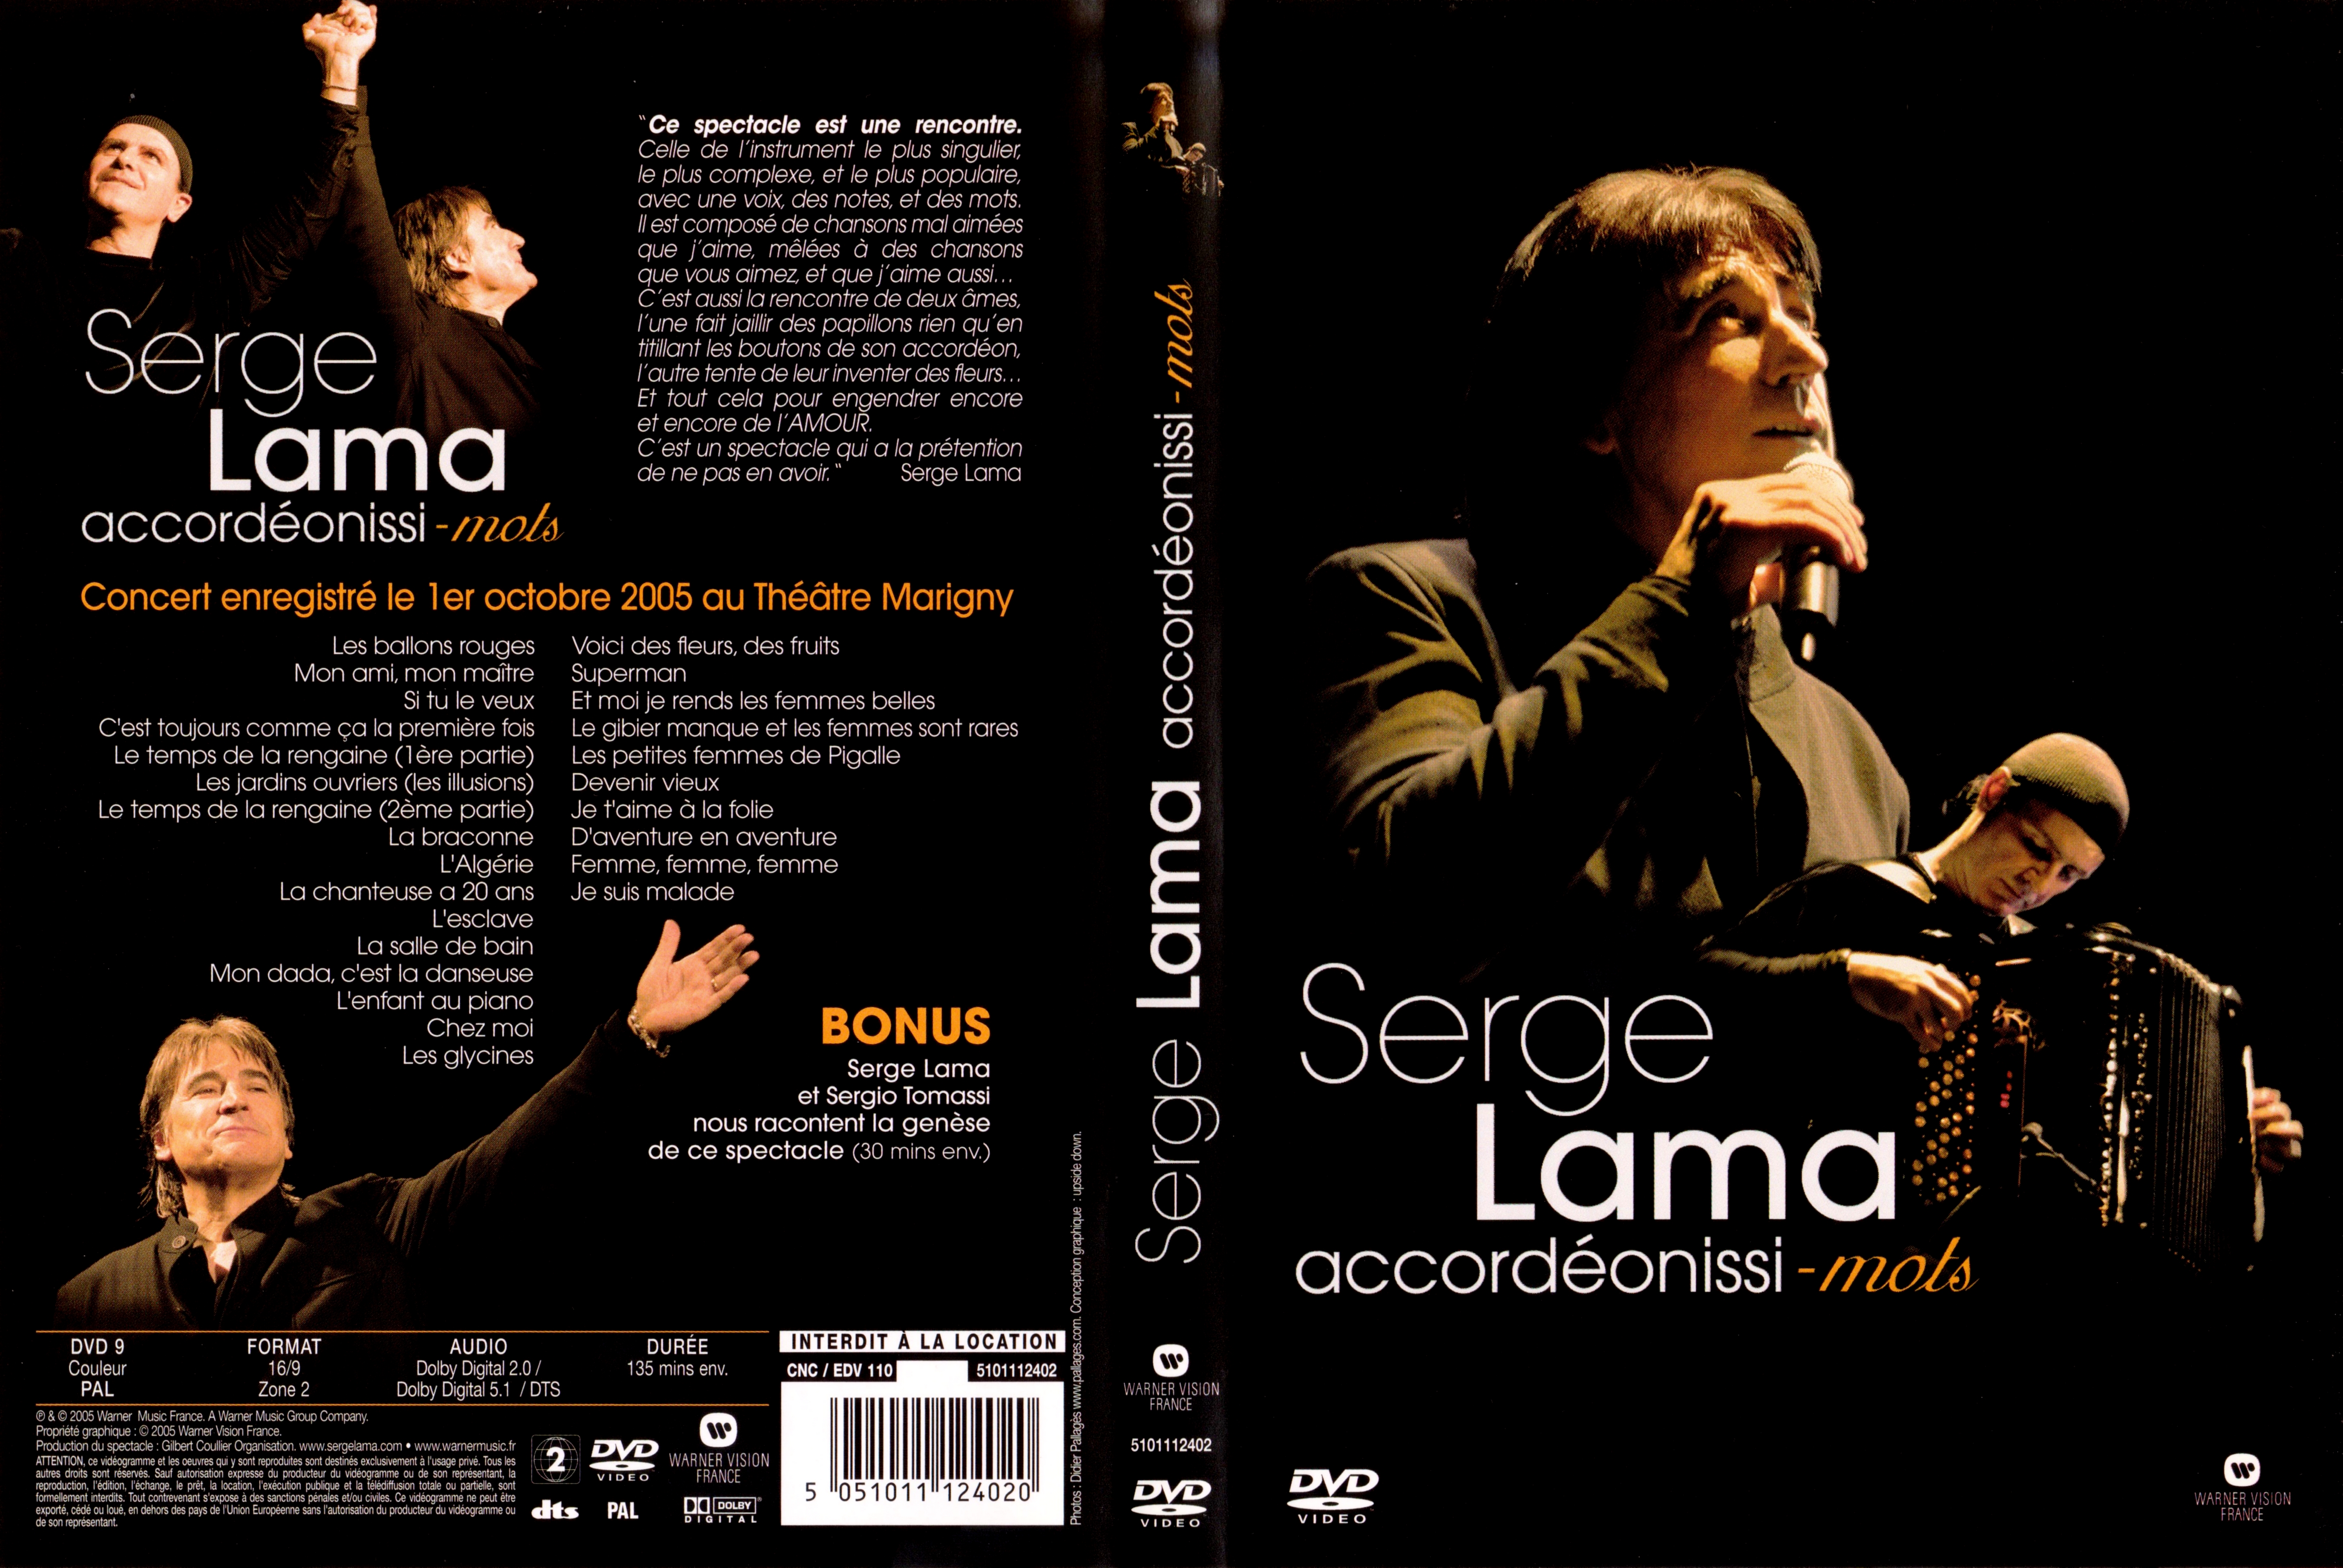 Jaquette DVD Serge Lama Accordeonissi-mots